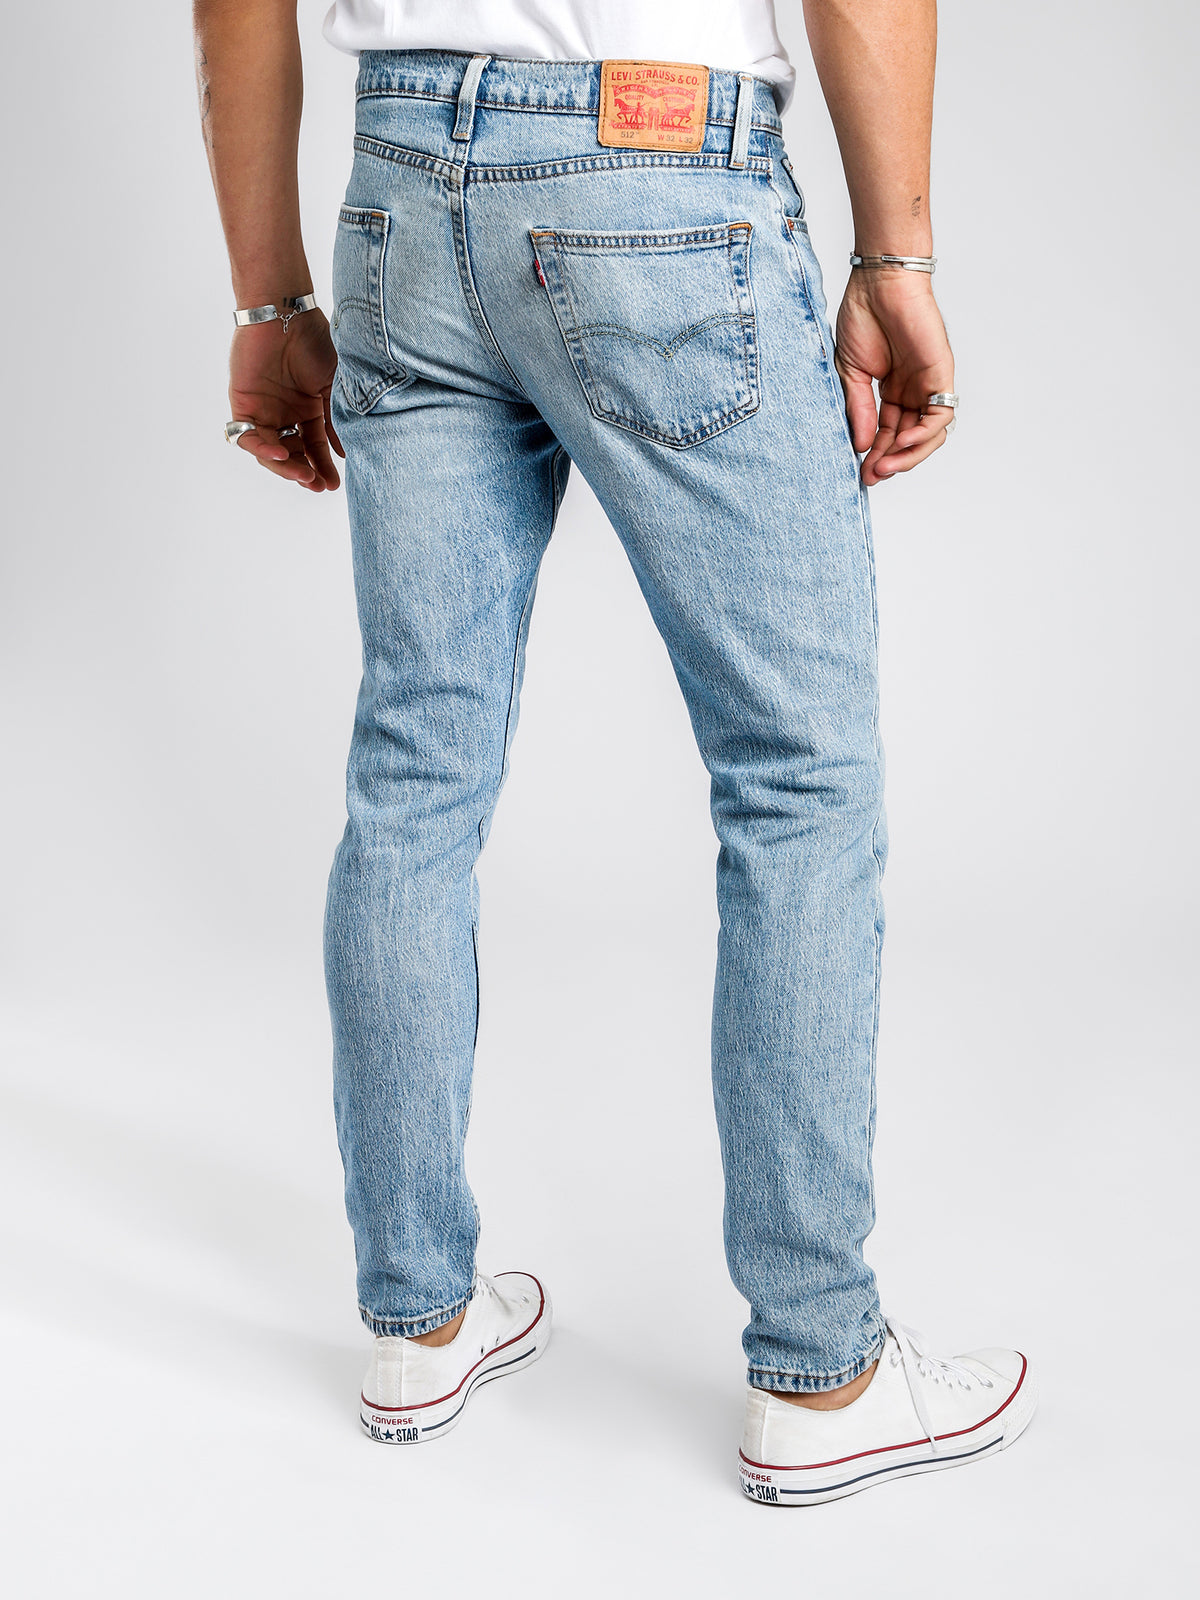 512 Slim Tapered Fit Jeans in Bass Super Light Denim